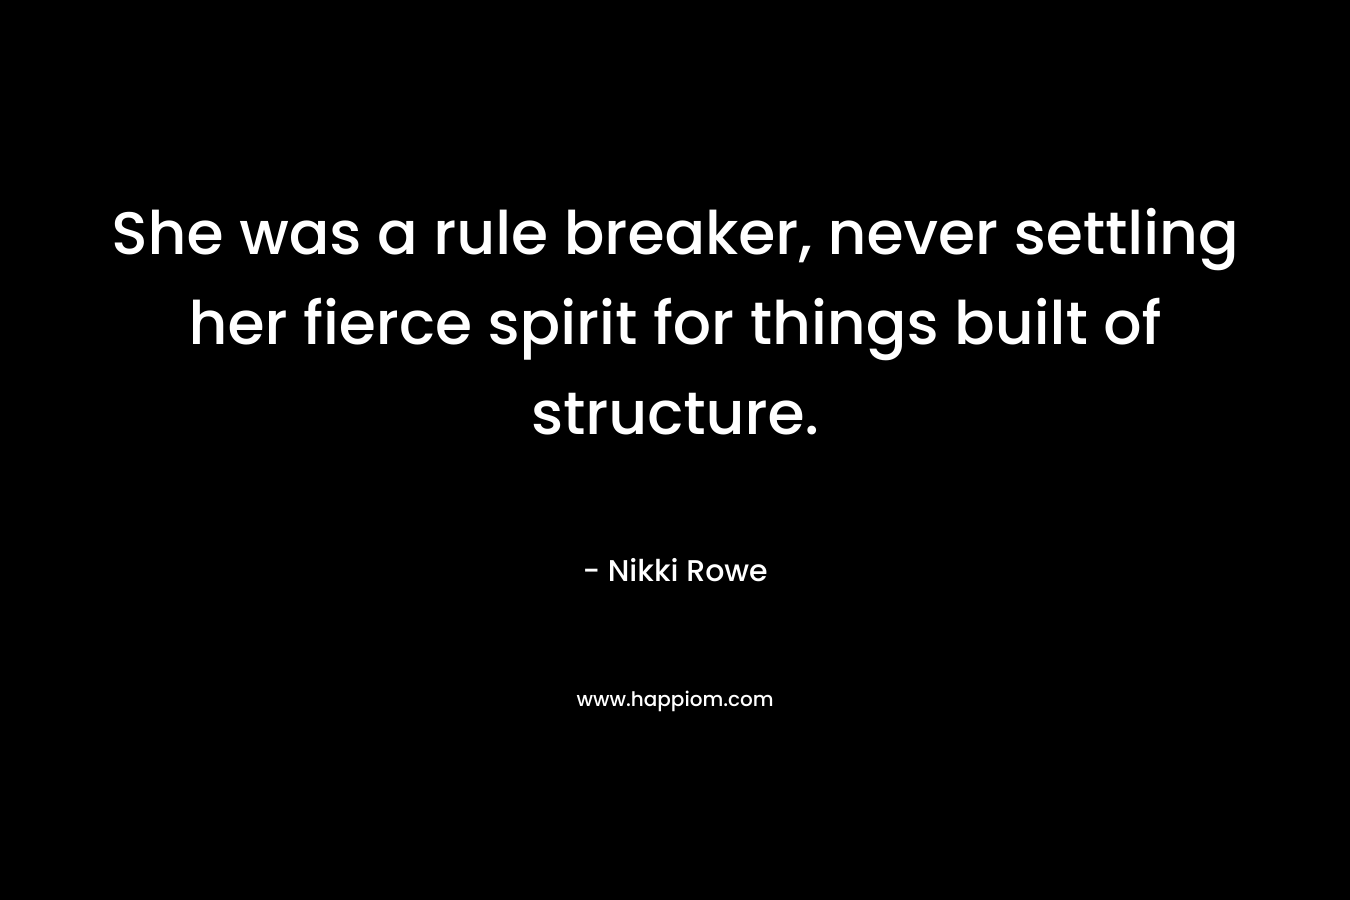 She was a rule breaker, never settling her fierce spirit for things built of structure. – Nikki Rowe